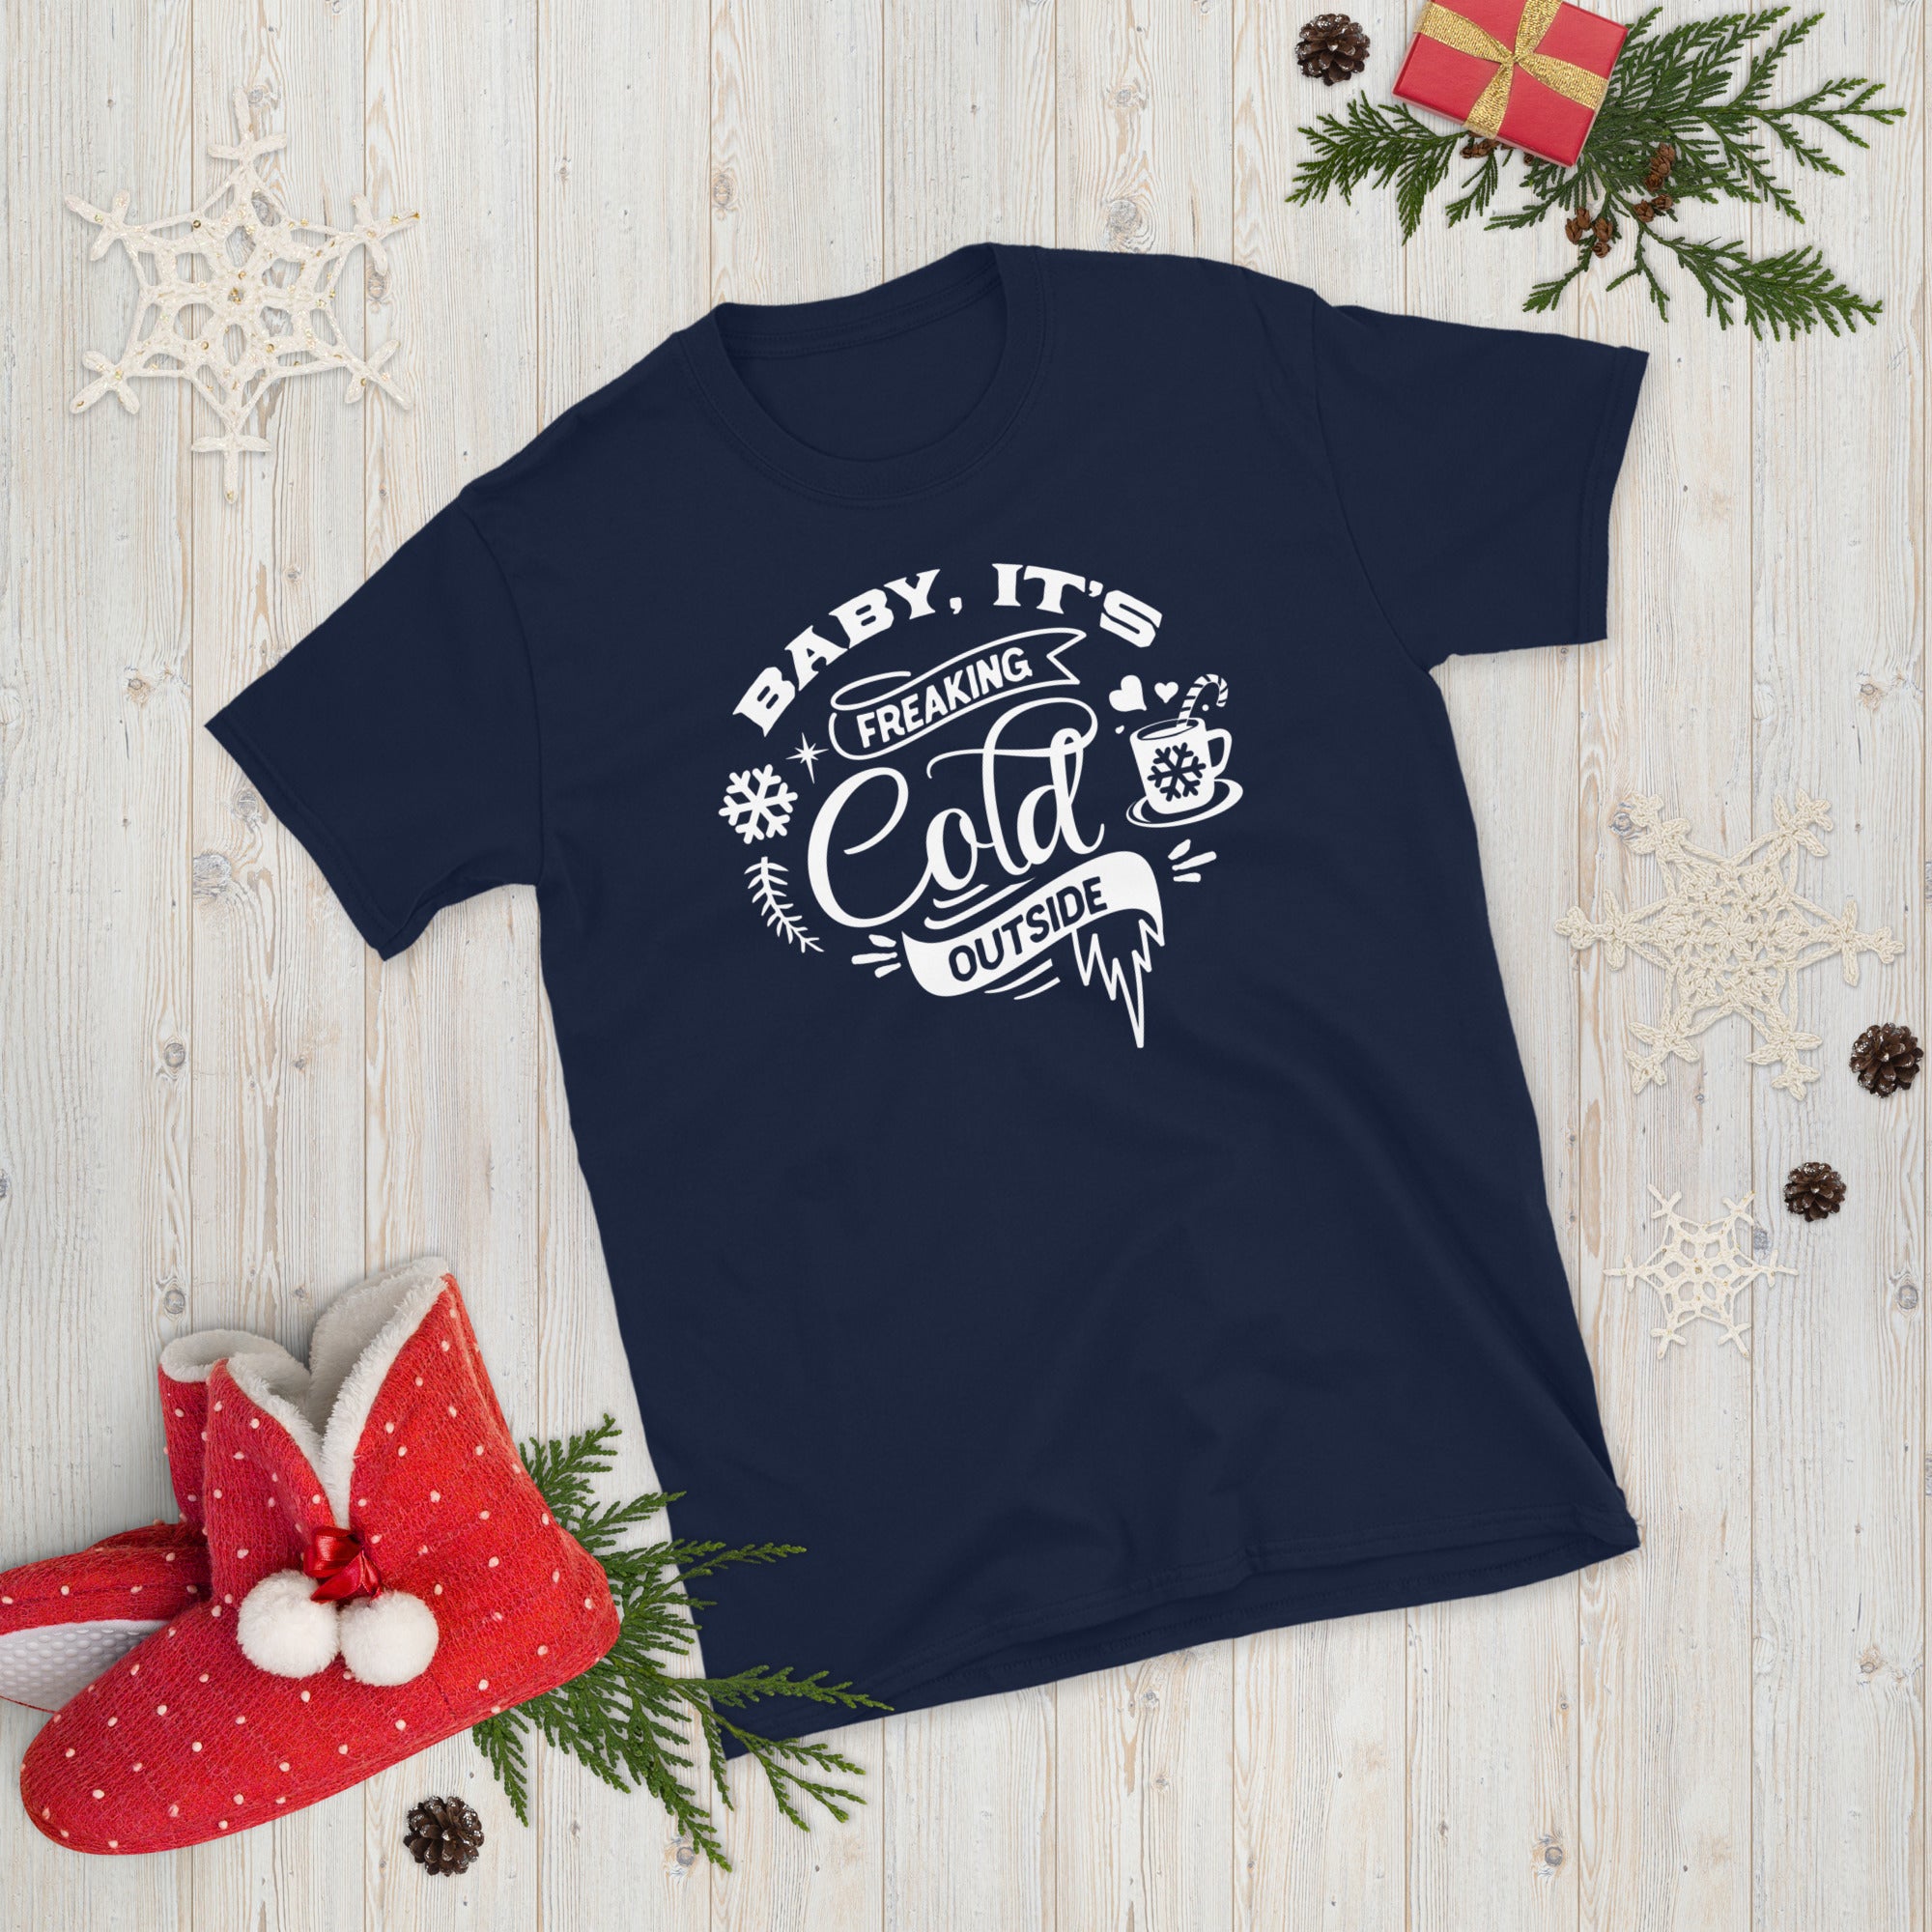 Baby Its Cold Outside Shirt, Holiday Shirt, Cute Christmas Shirt, Funny Christmas Shirt, Matching Christmas, Gift for Her, Cute Winter Shirt